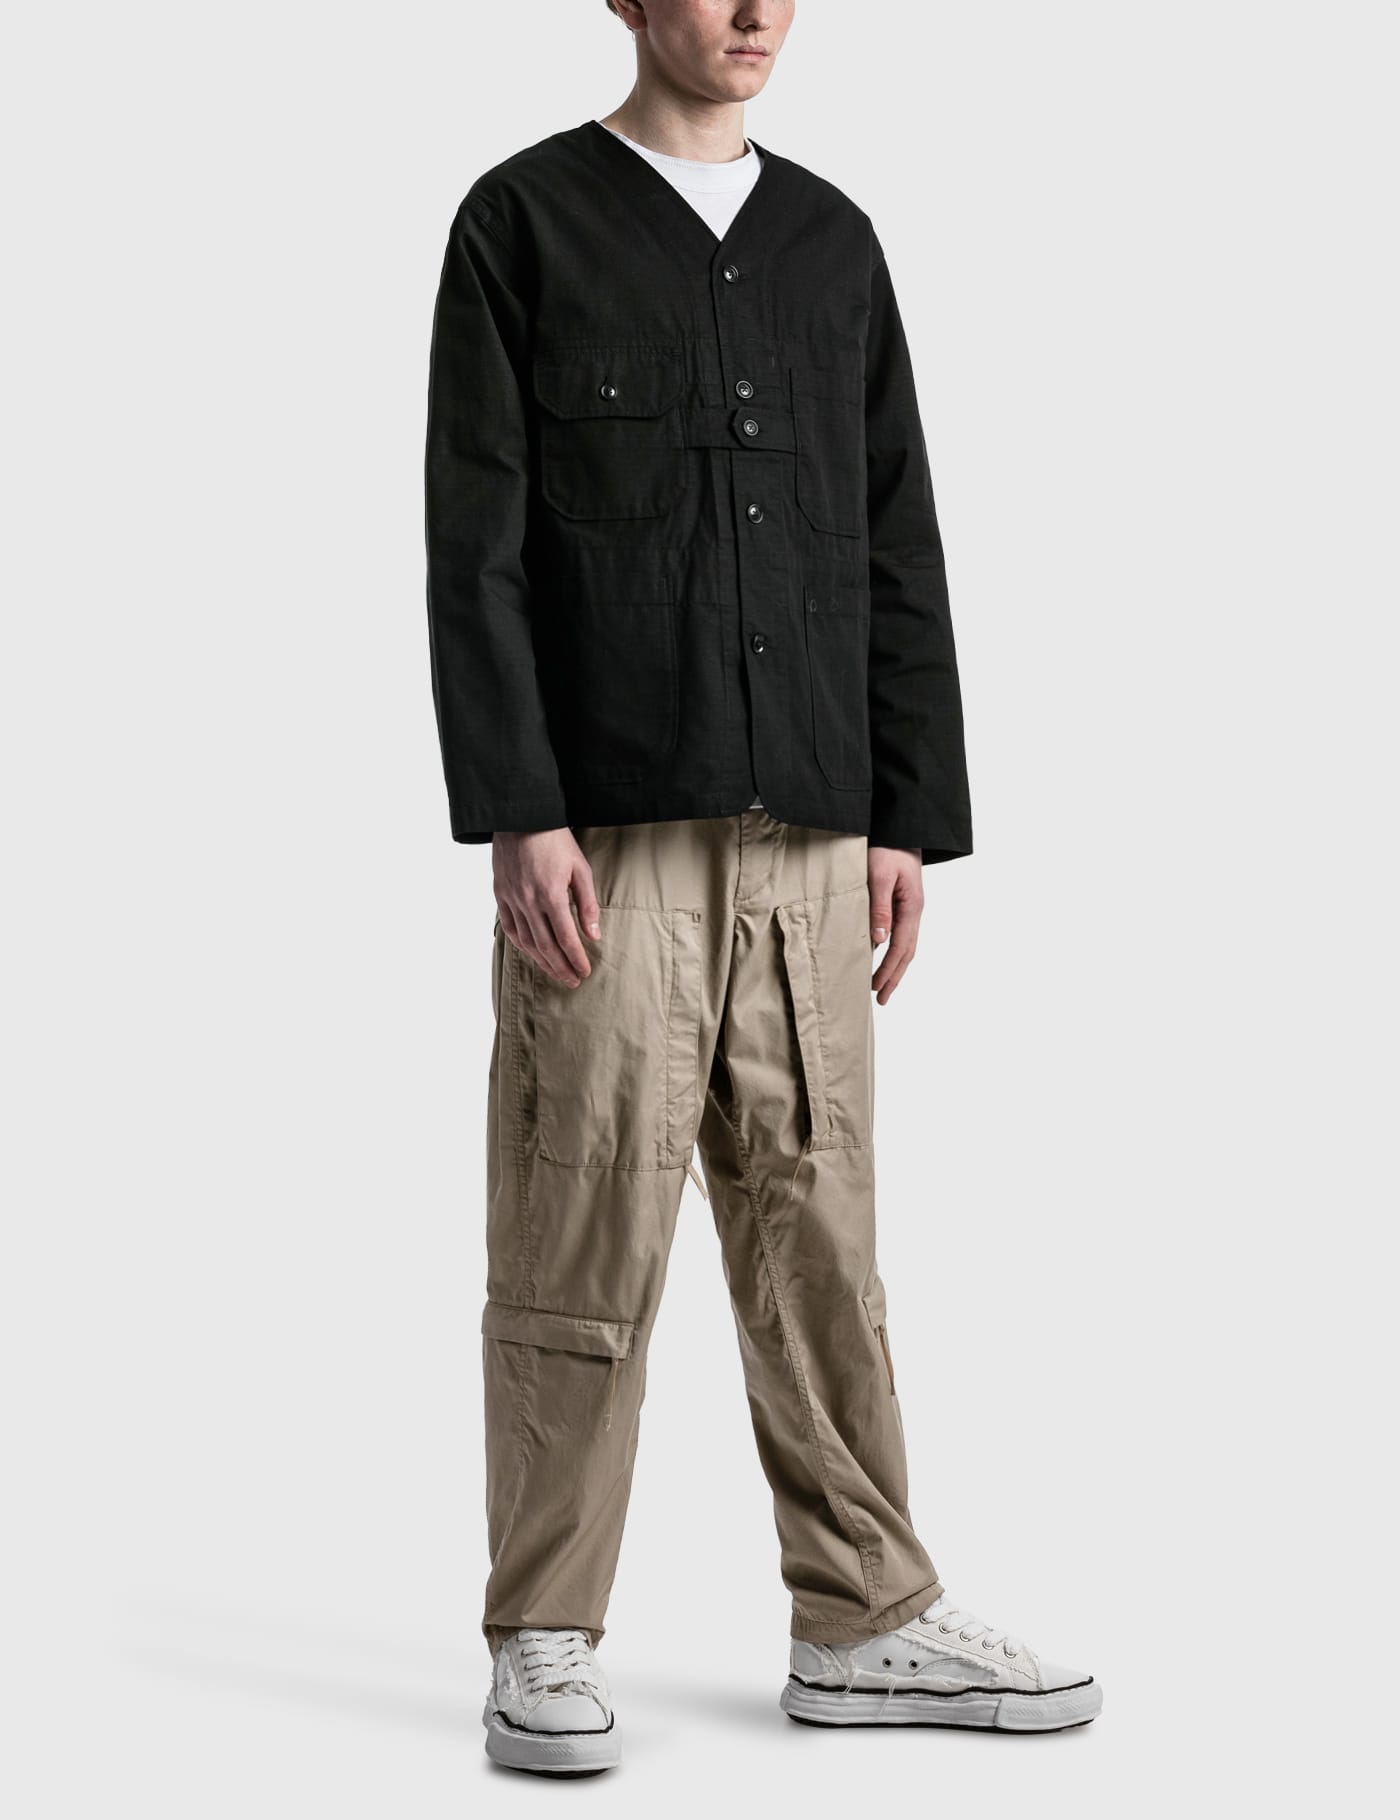 Engineered Garments - Cardigan Jacket | HBX - Globally Curated 